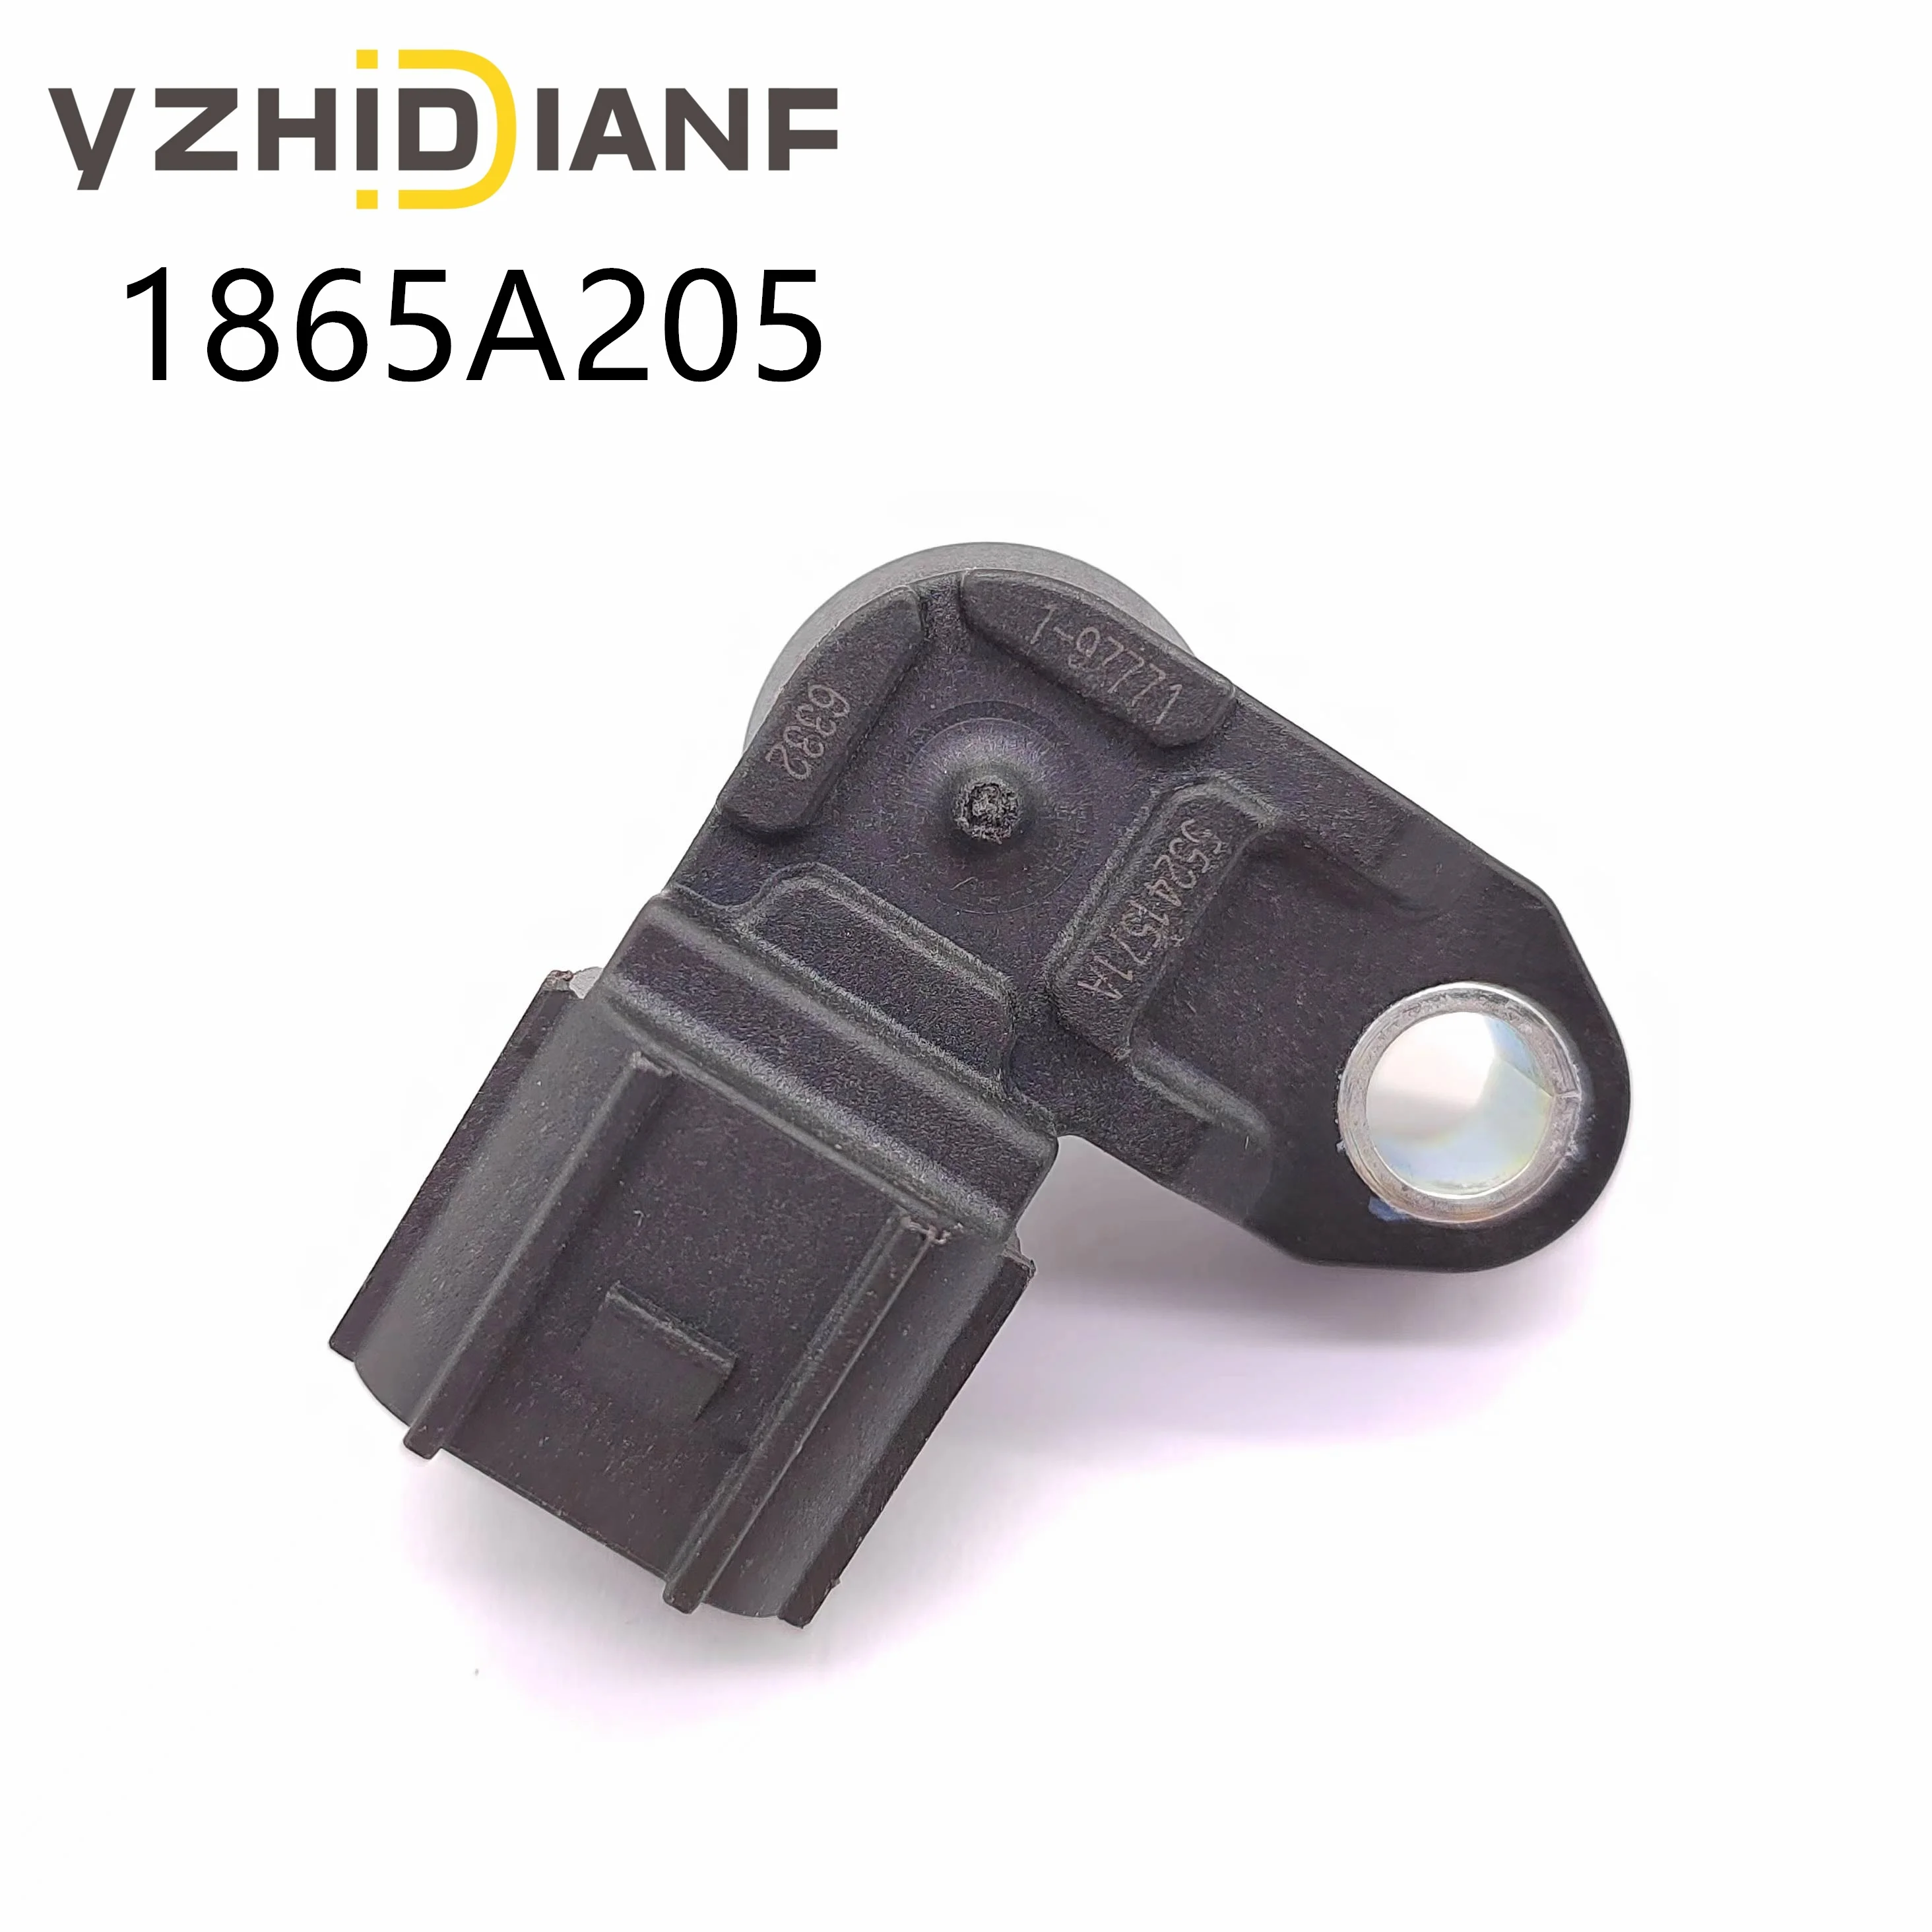 

1x 1865A205 6BH-82380-00 Intake Pressure Sensor for Yamaha Motorcycle FX FZ VX PWC Jet Boats SX240 09-15